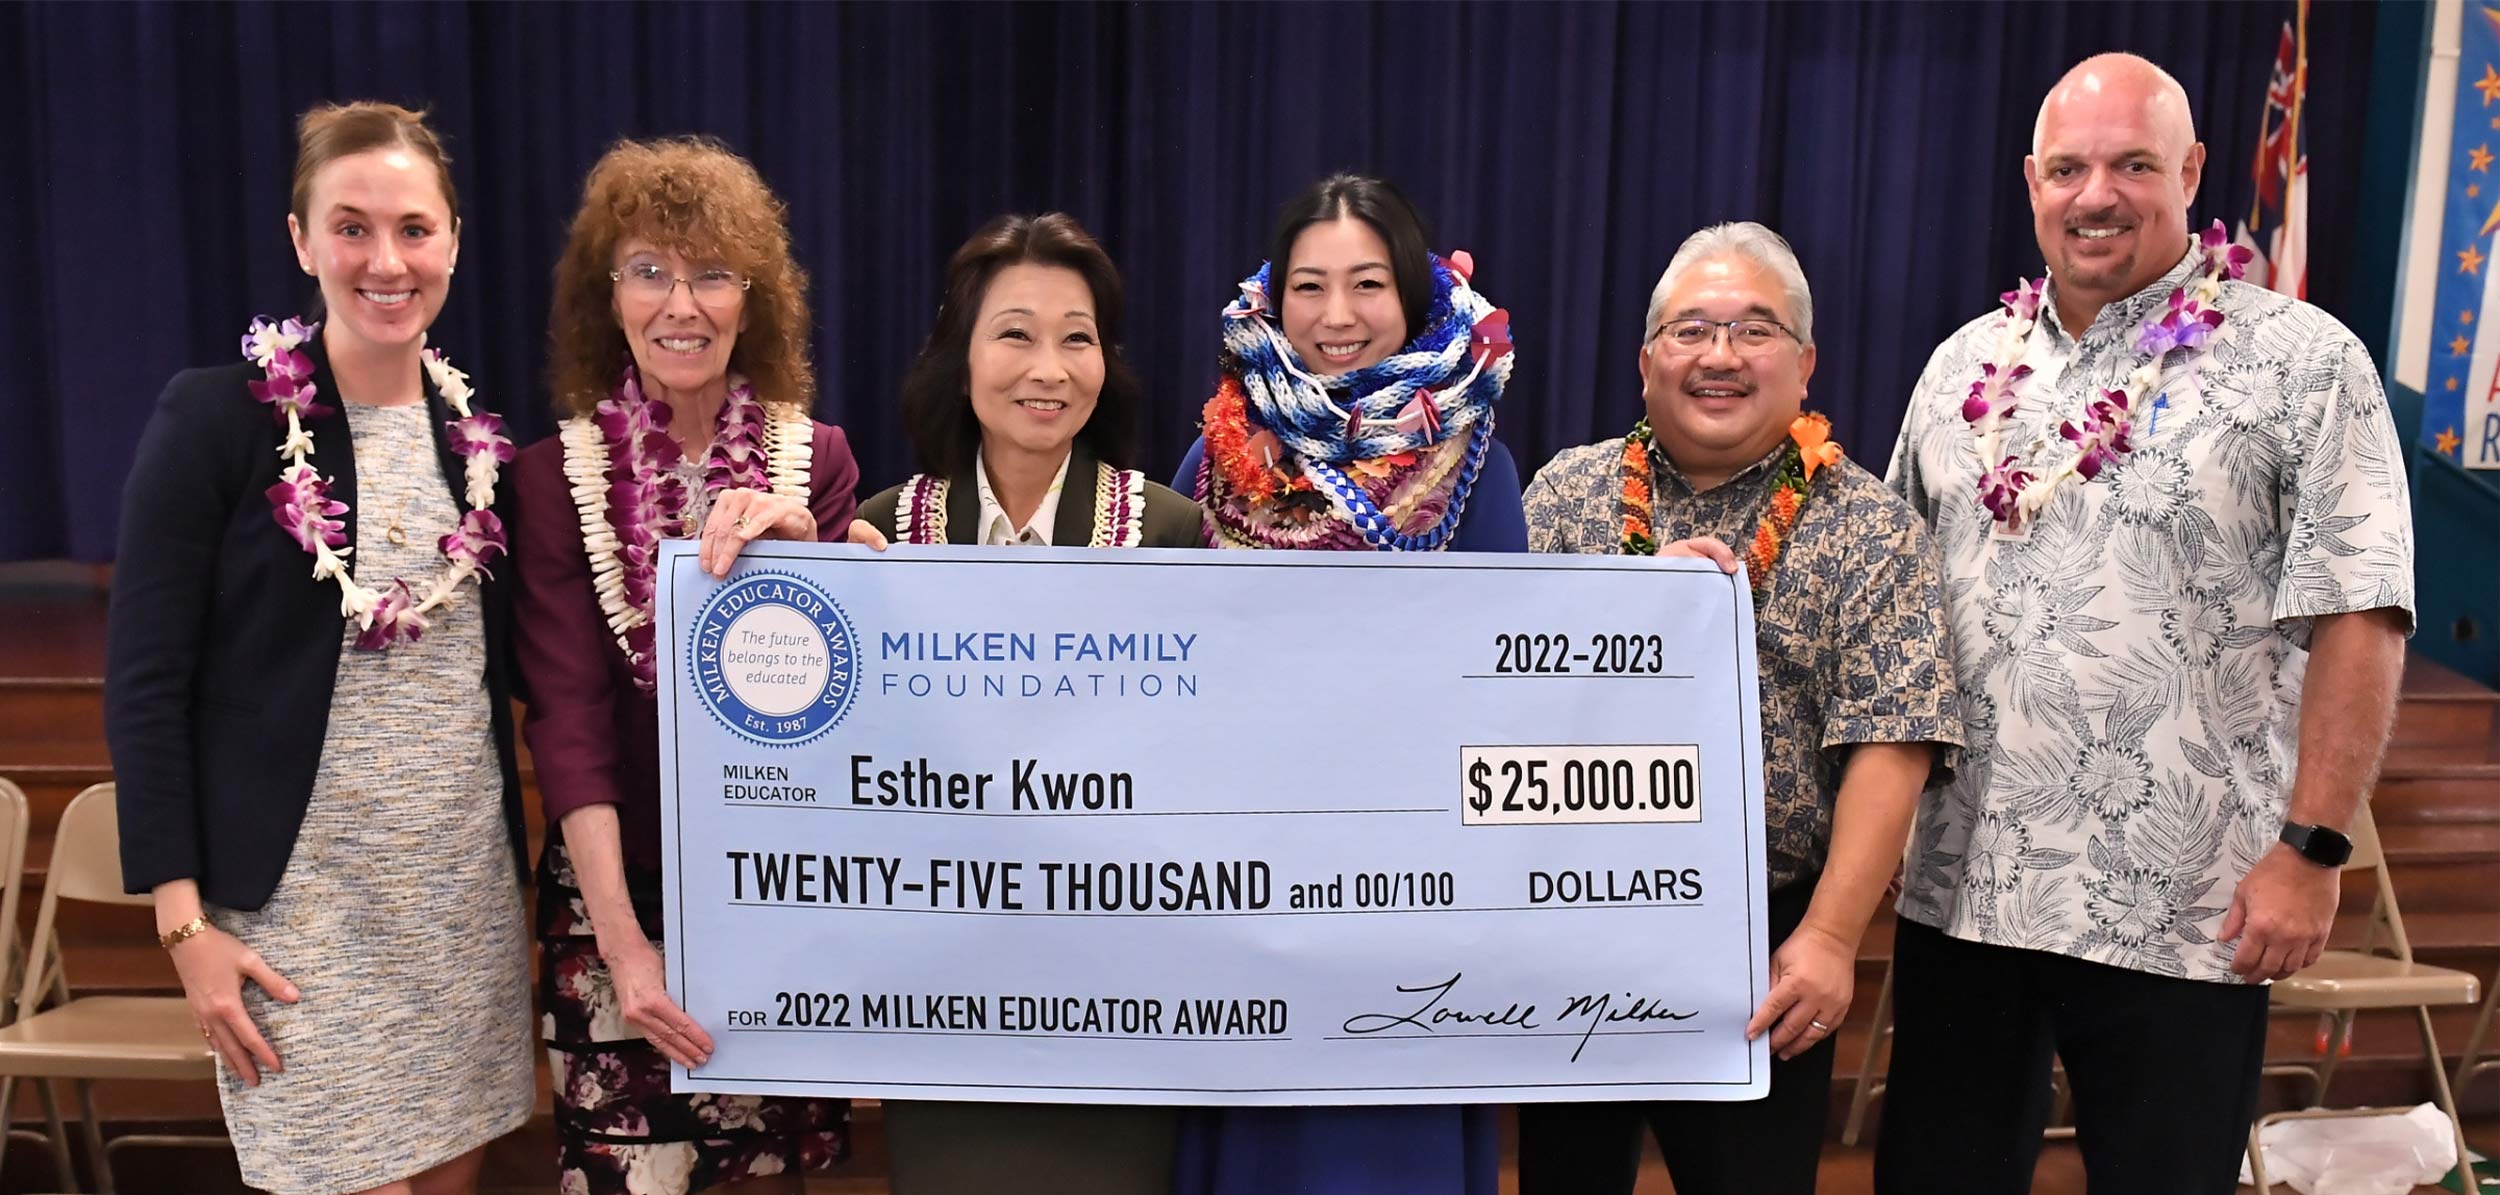 Kristin Walje, Jane Foley, Sylvia Luke, Esther Kwon, Keith Hayashi, and Robert Davis accepting a large check for $25,000